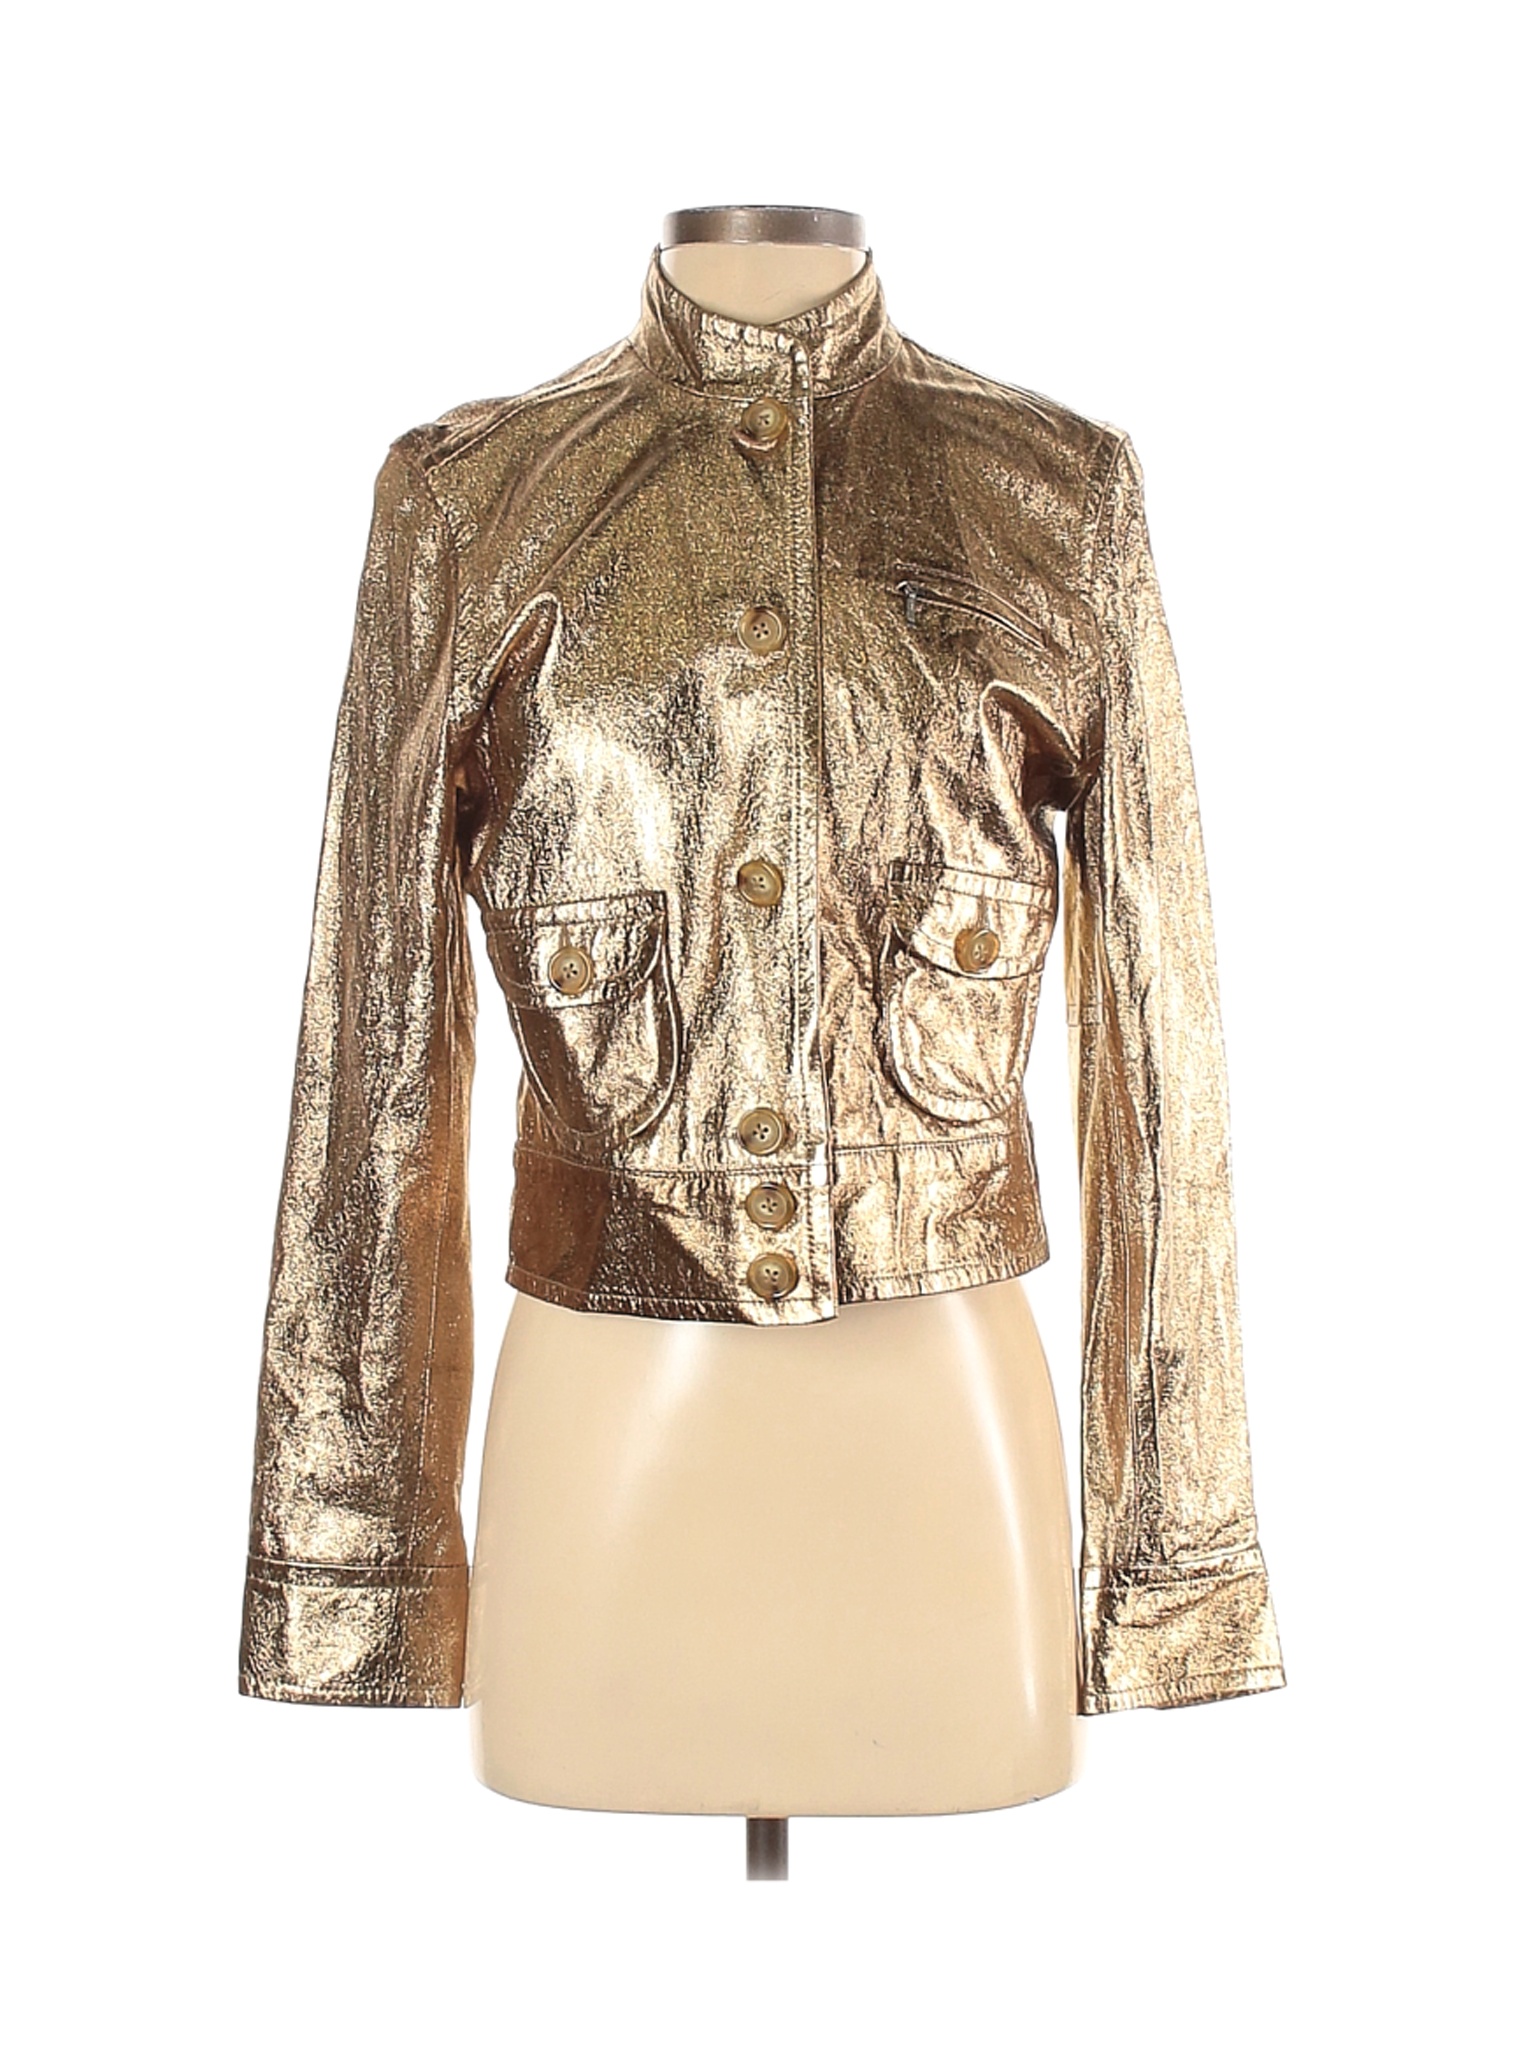 George Me by Mark Eisen Women Gold Leather Jacket 4 | eBay